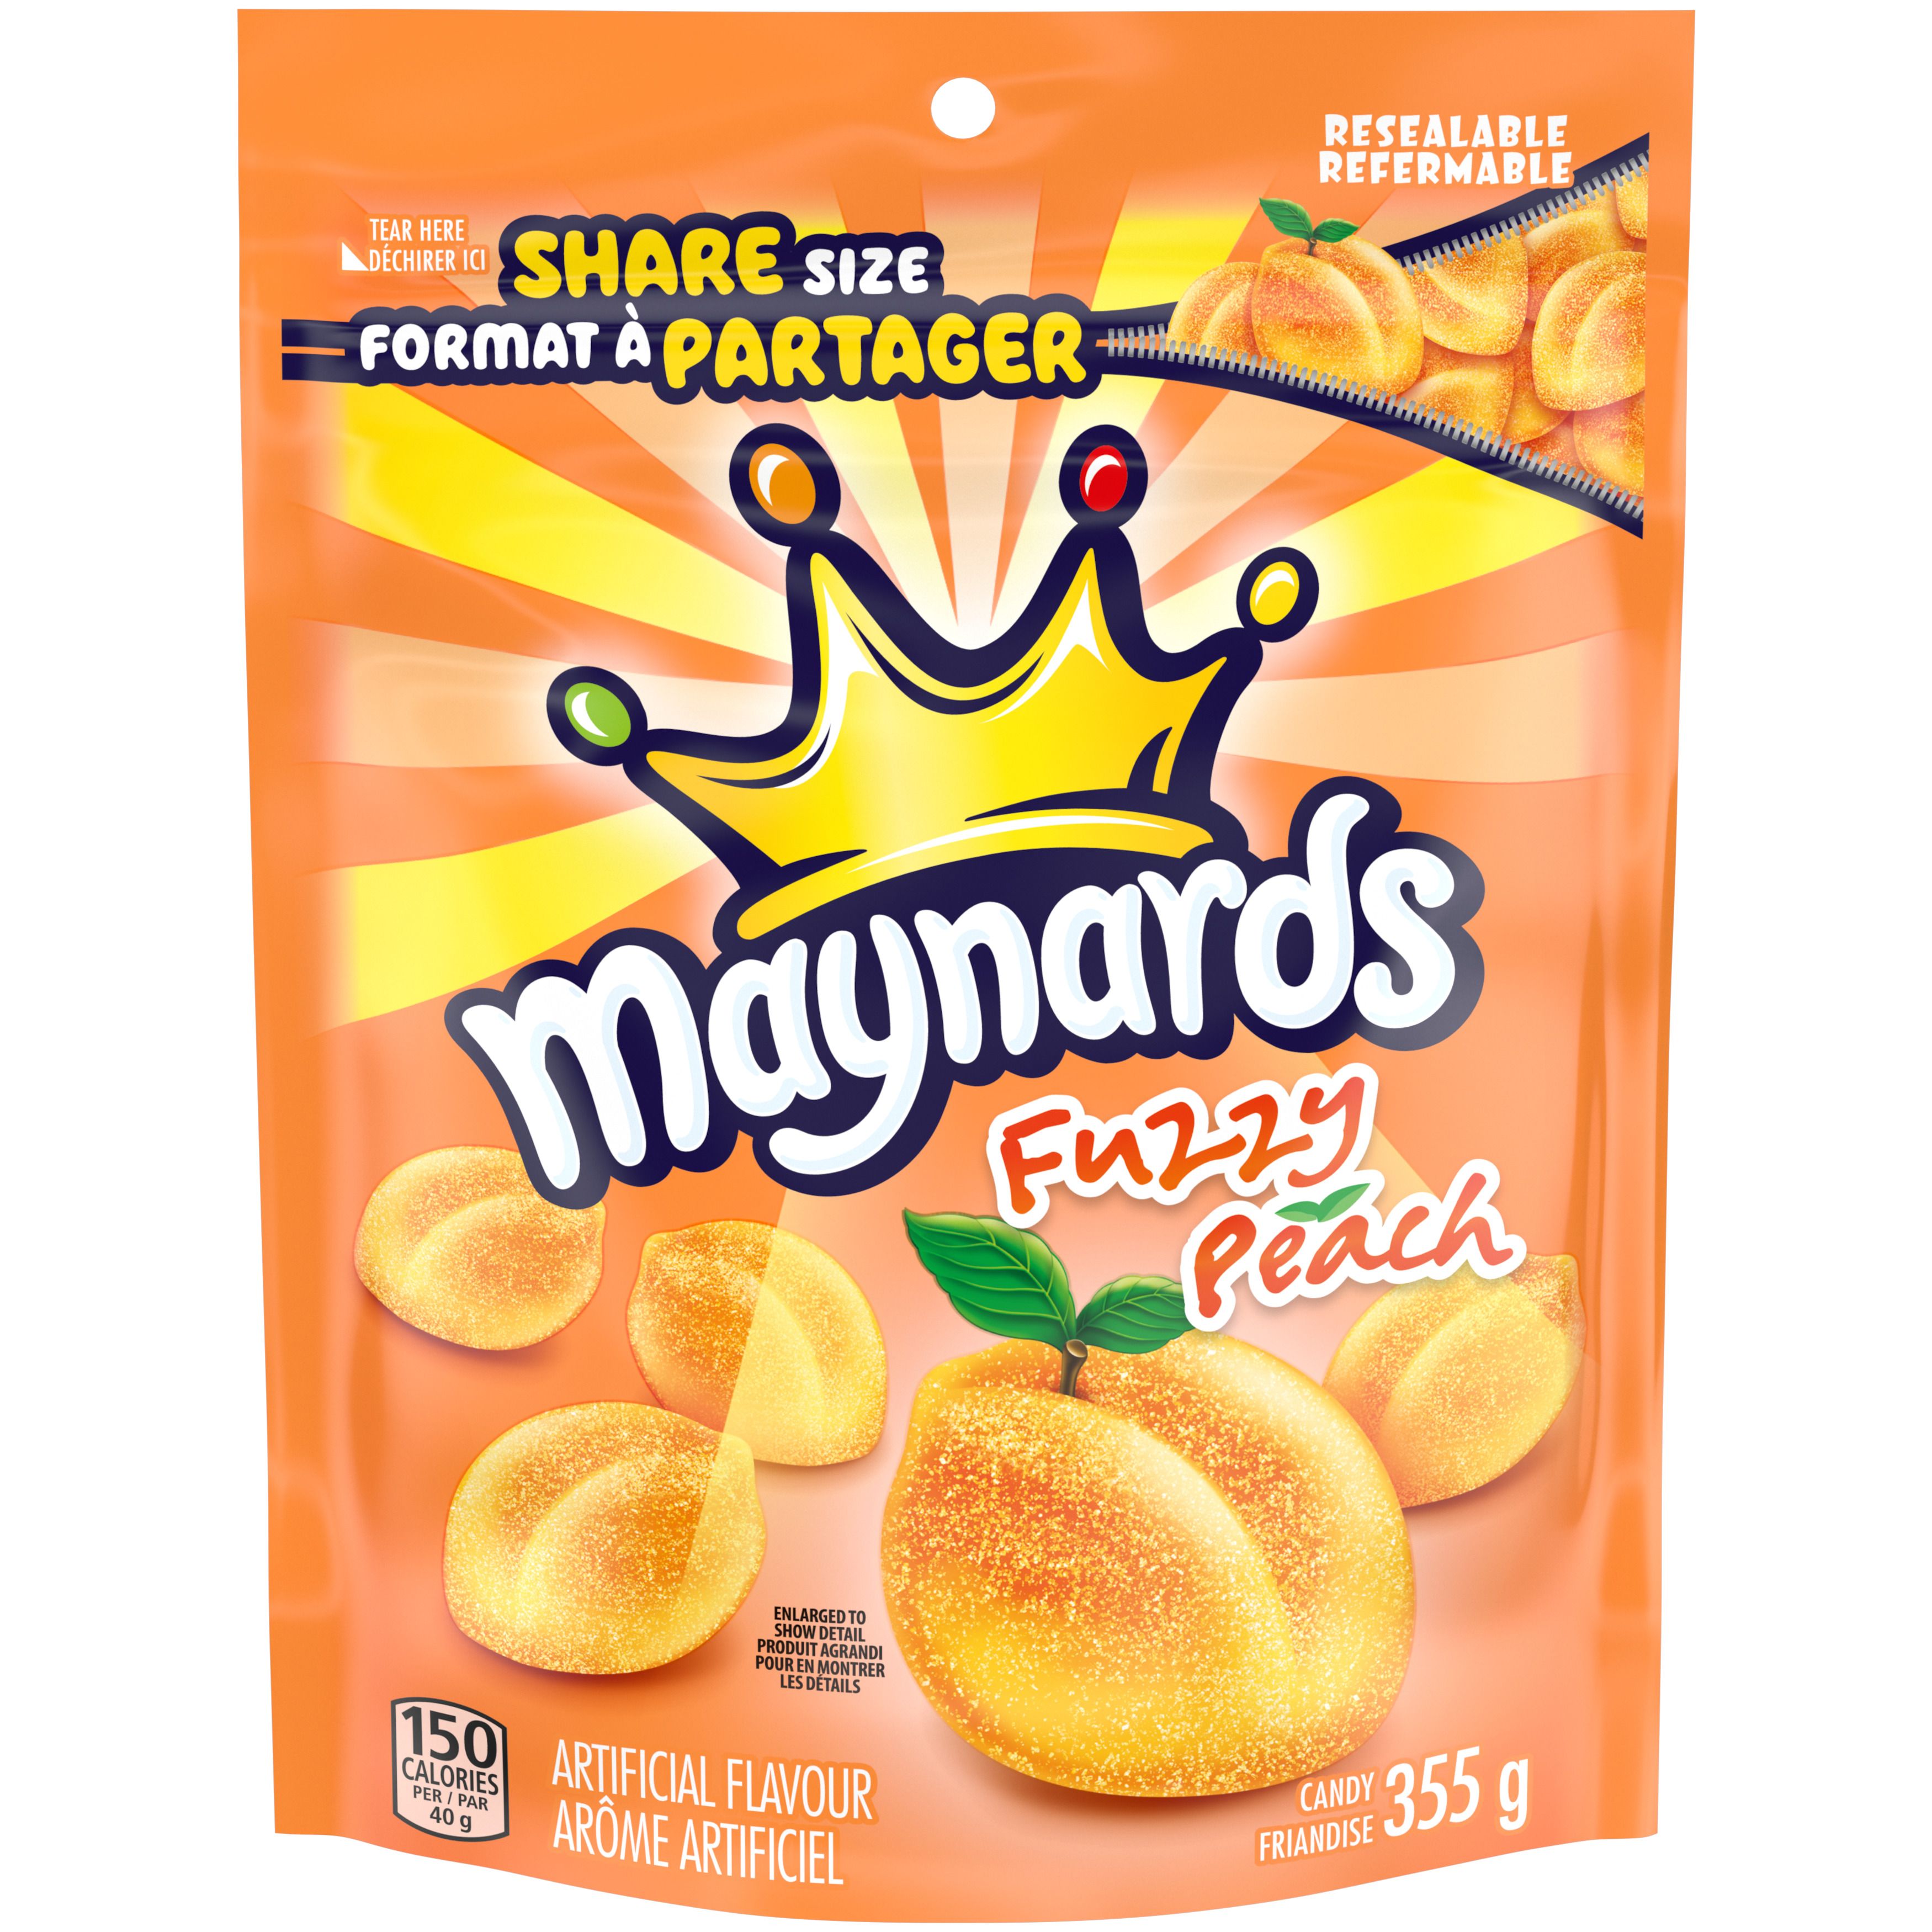 Maynards Fuzzy Peach Soft Candy 355 G